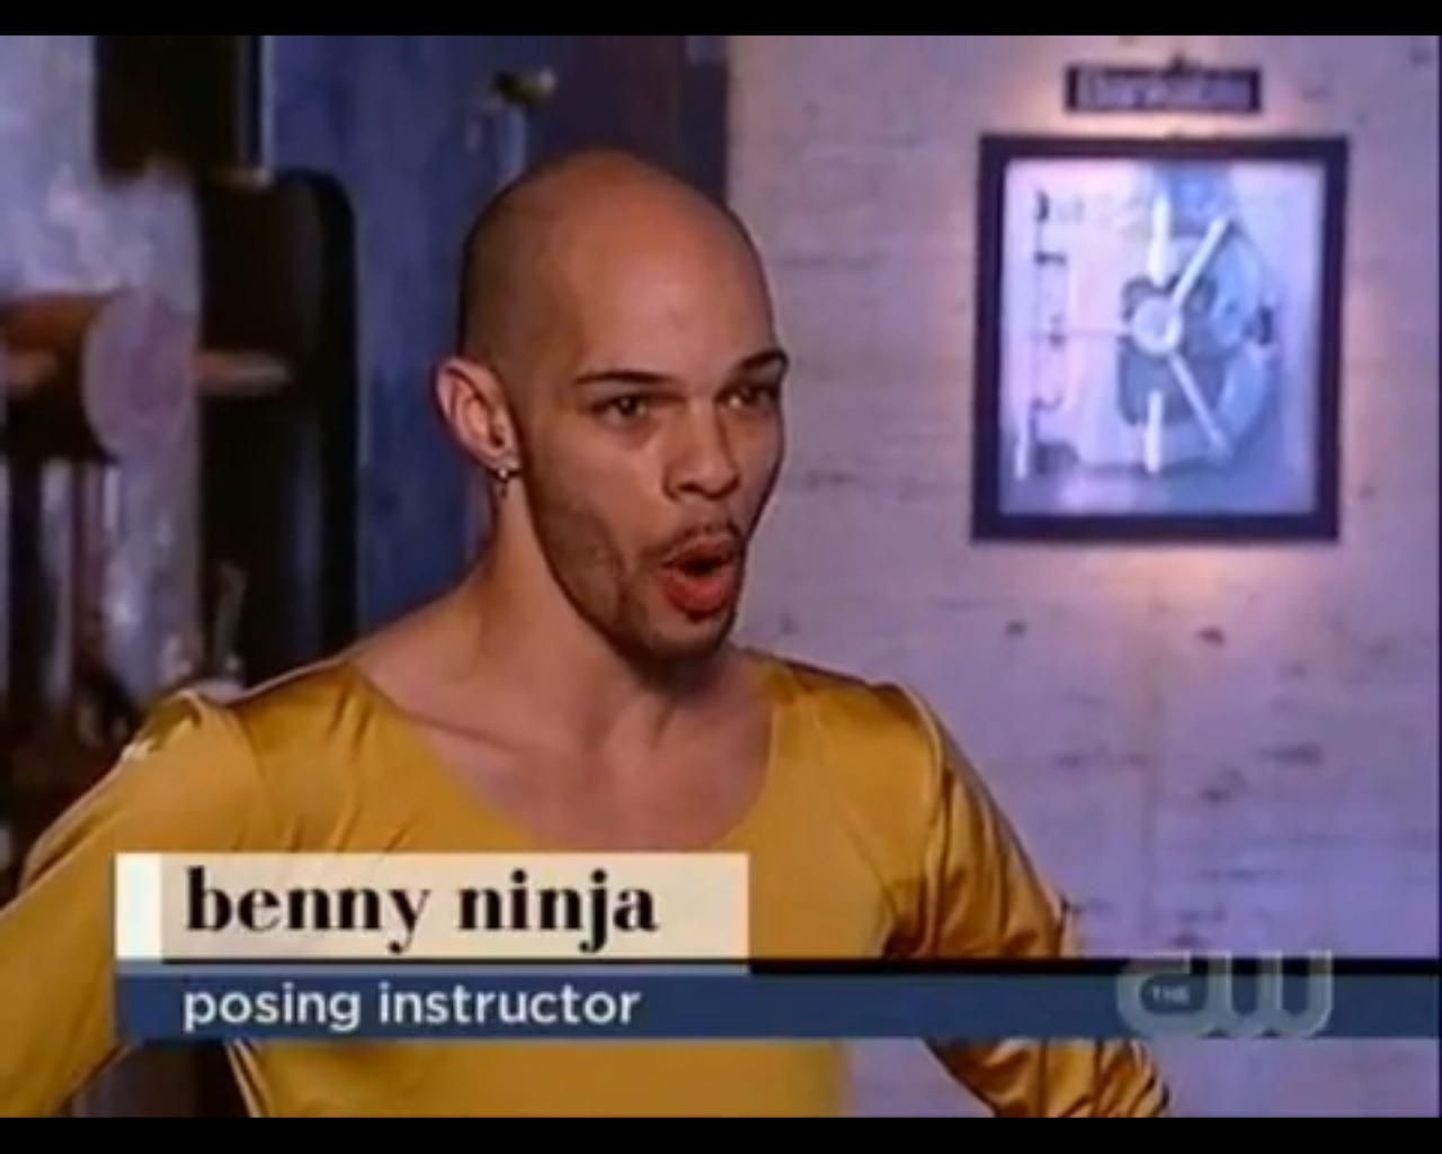 Benny Ninja